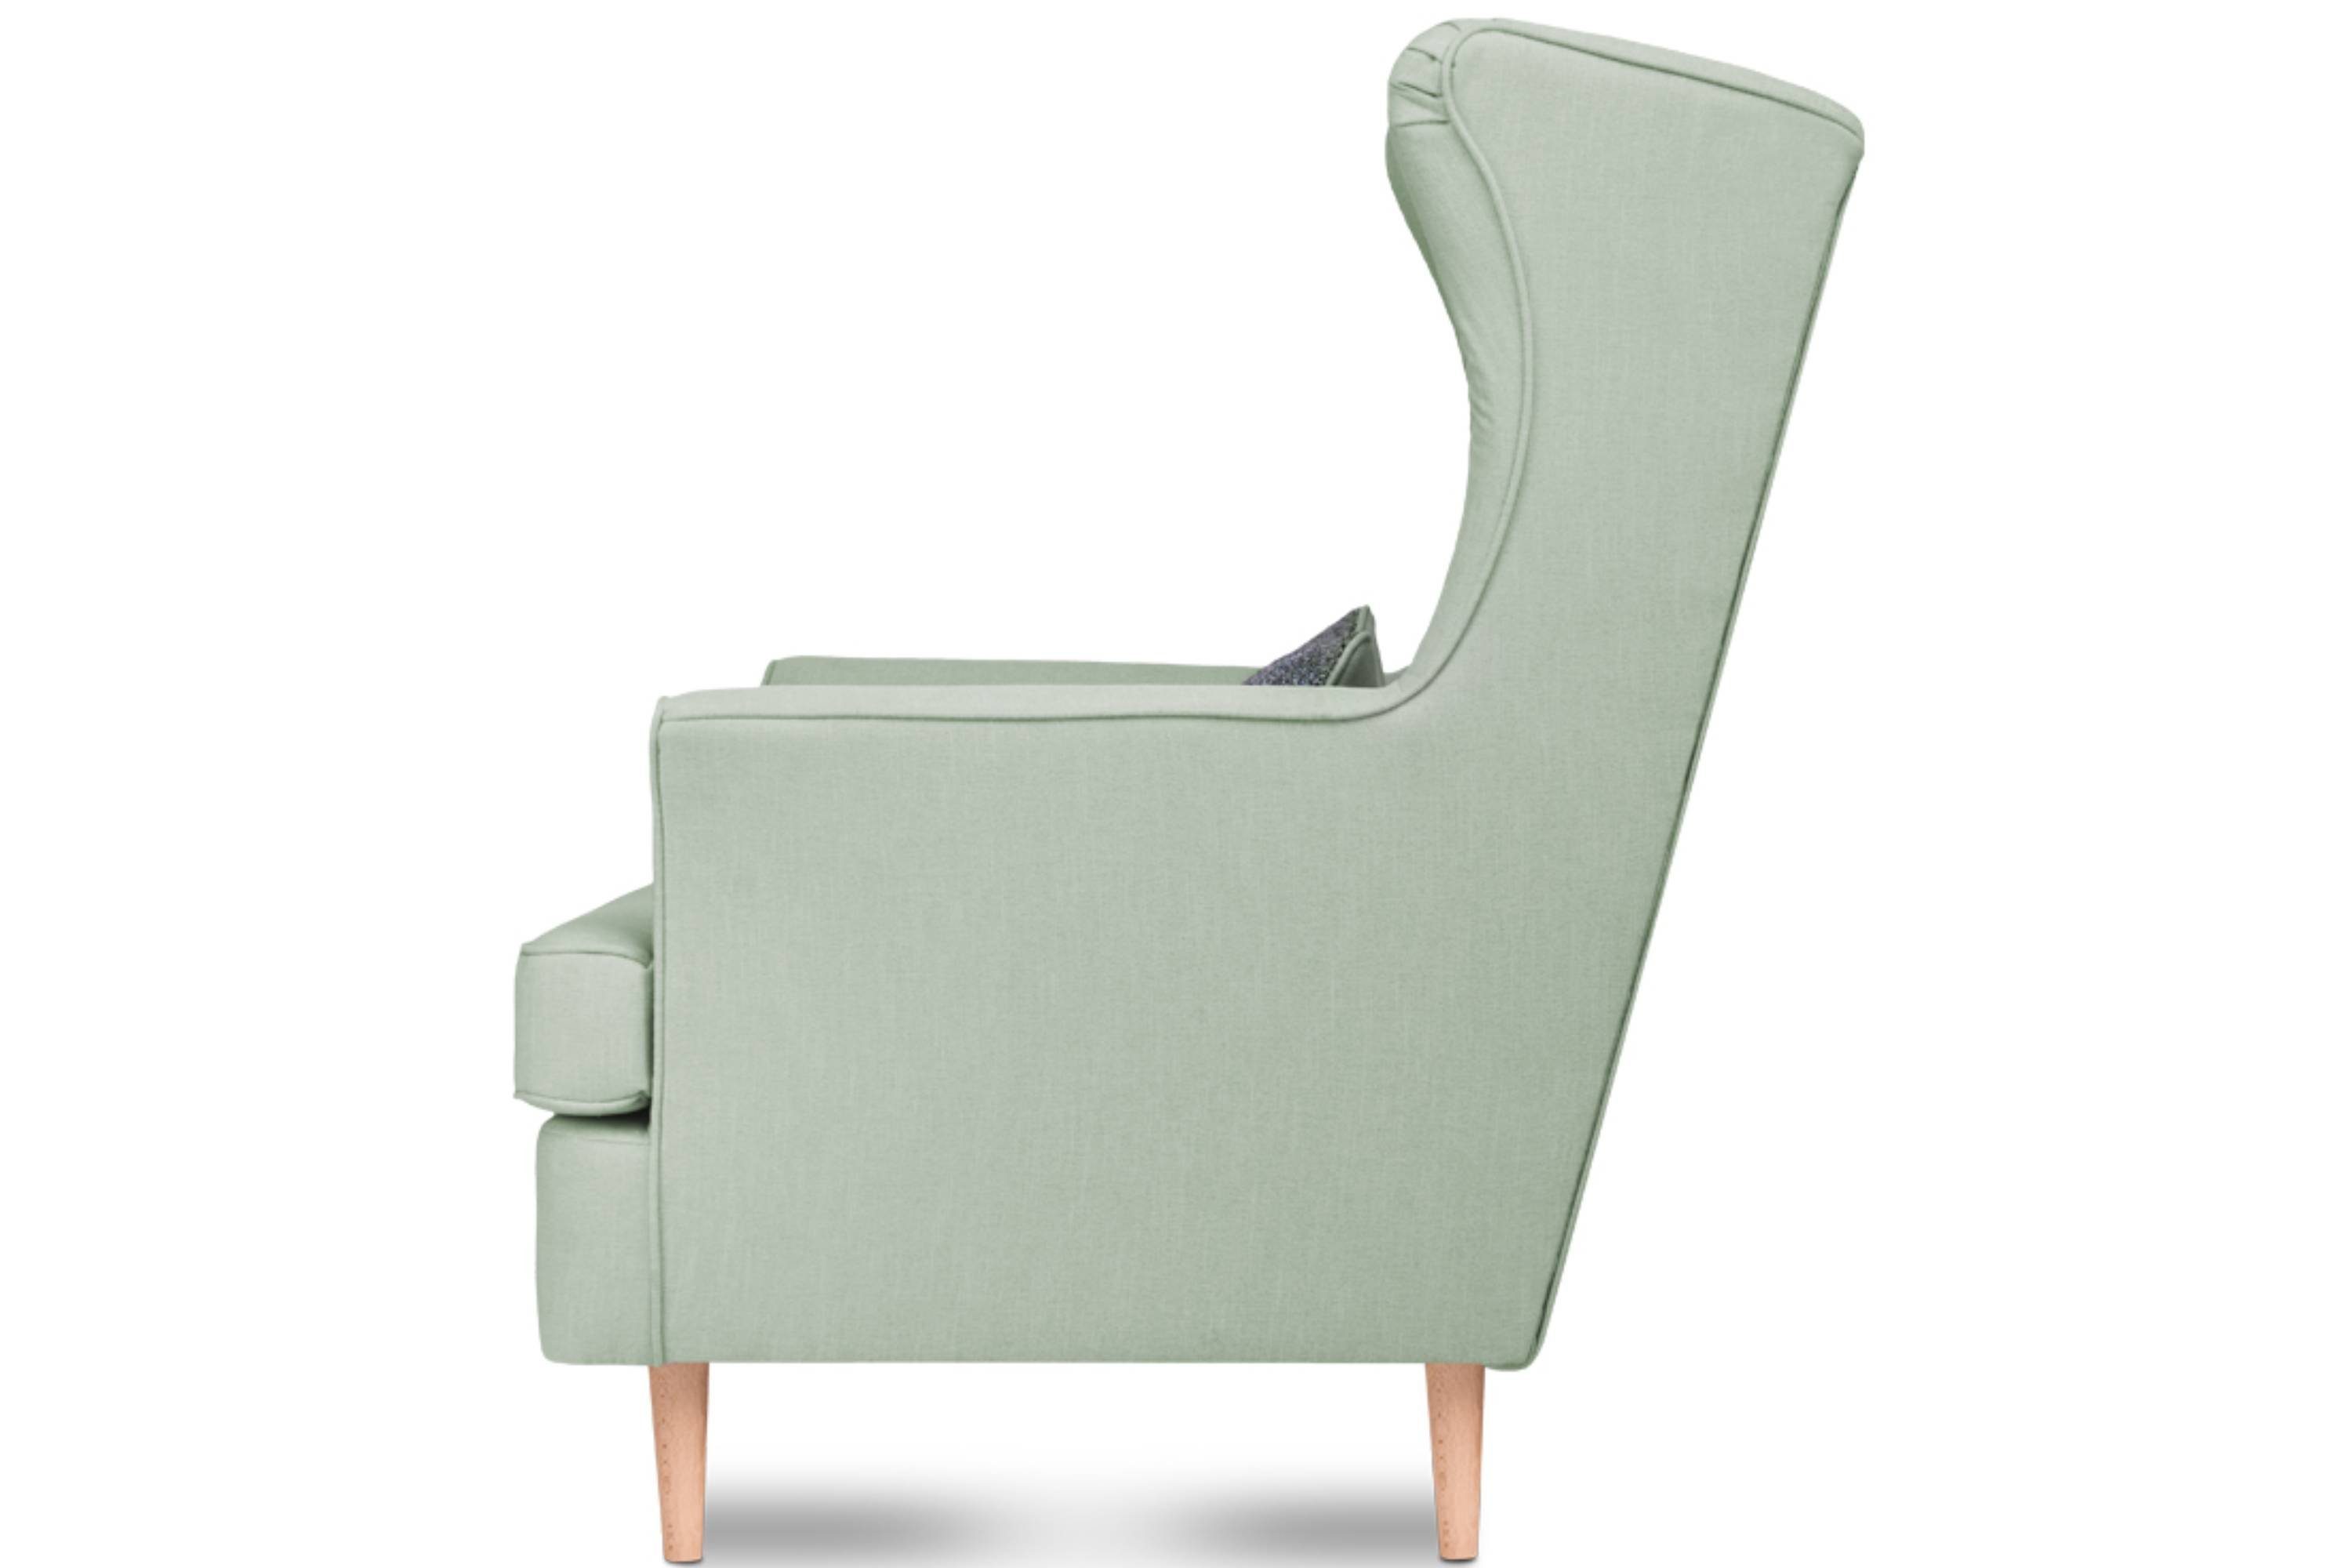 STRALIS Sessel, Design, Konsimo zeitloses inklusive Füße, hohe Ohrensessel Kissen dekorativem